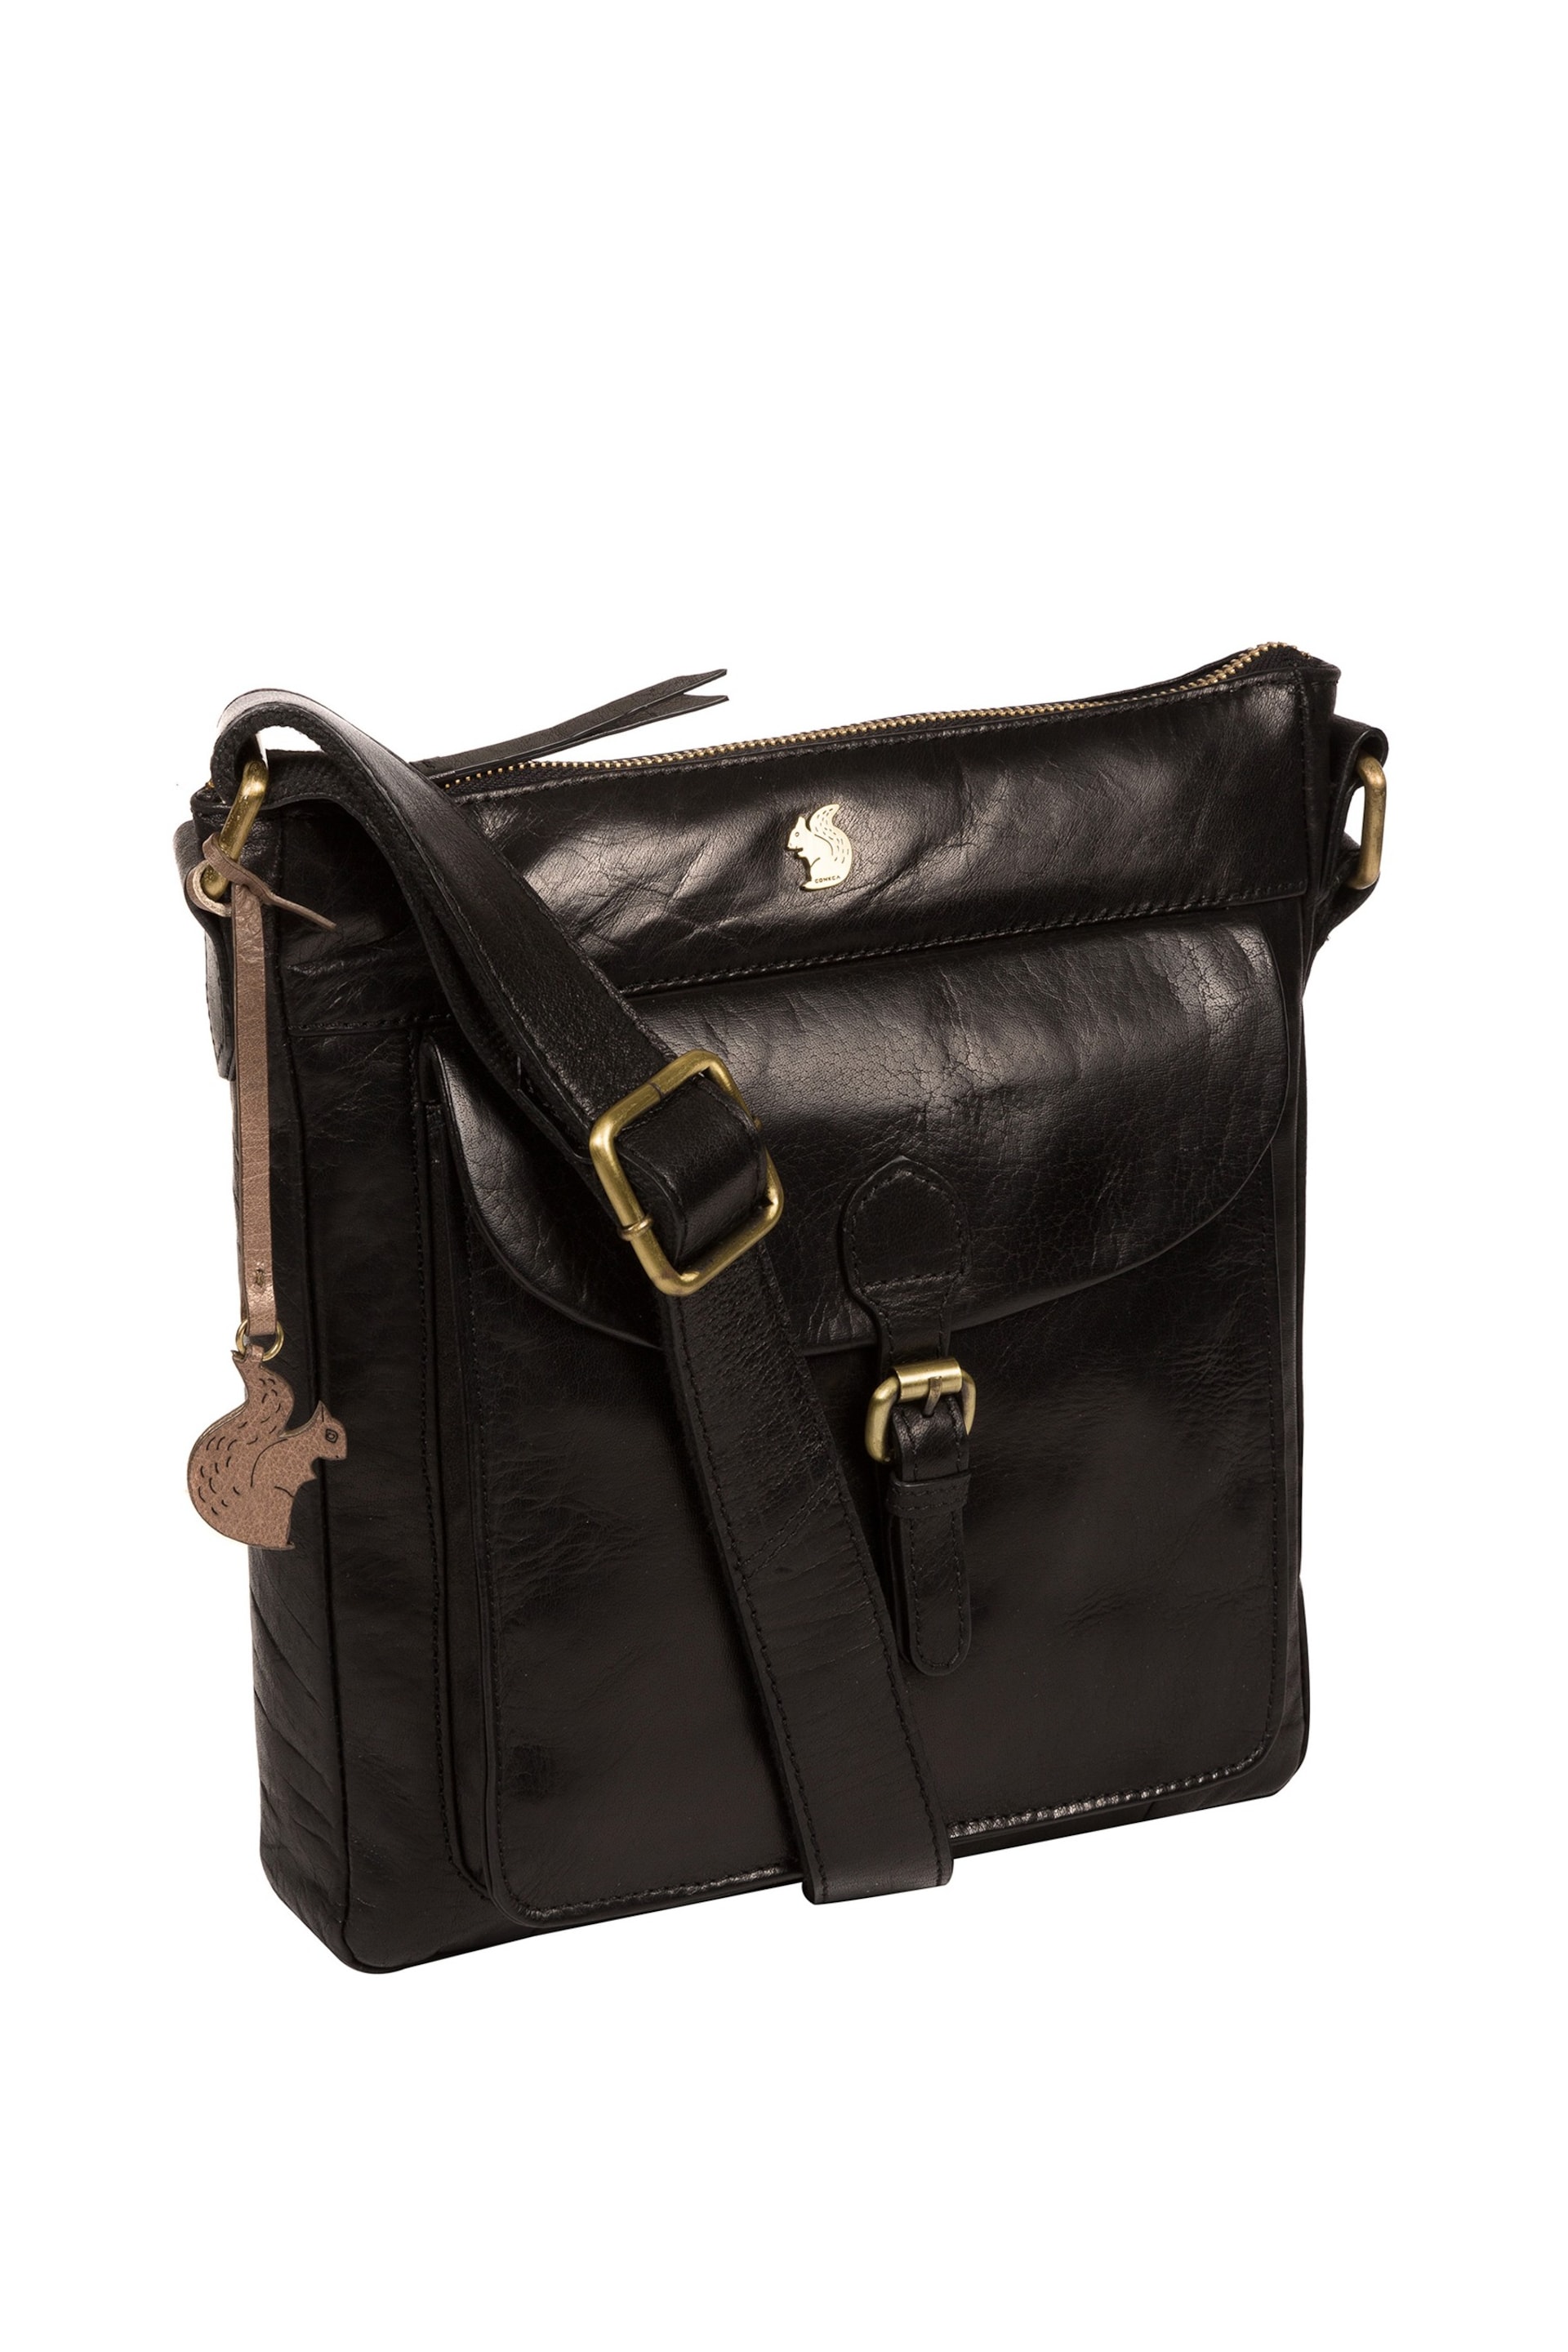 Conkca Josephine Leather Shoulder Bag - Image 1 of 5